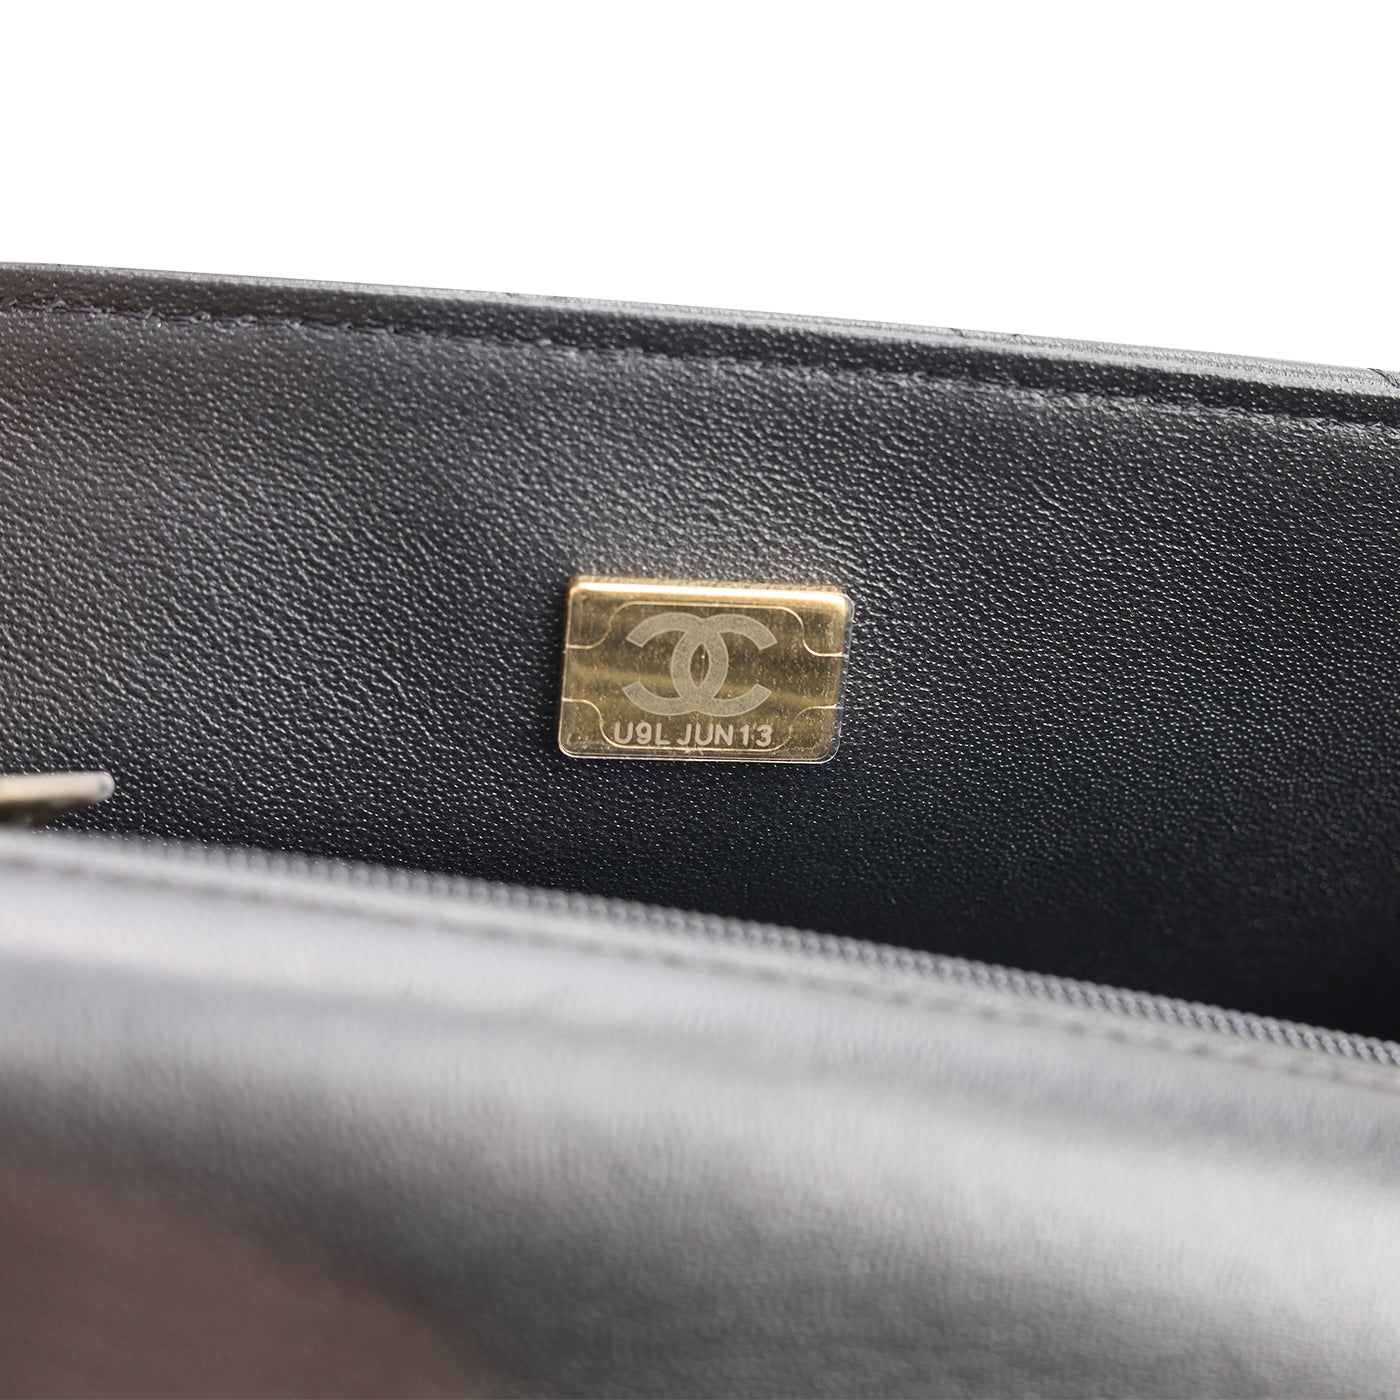 Classic Flap Bag - Mini Rectangular Top Handle